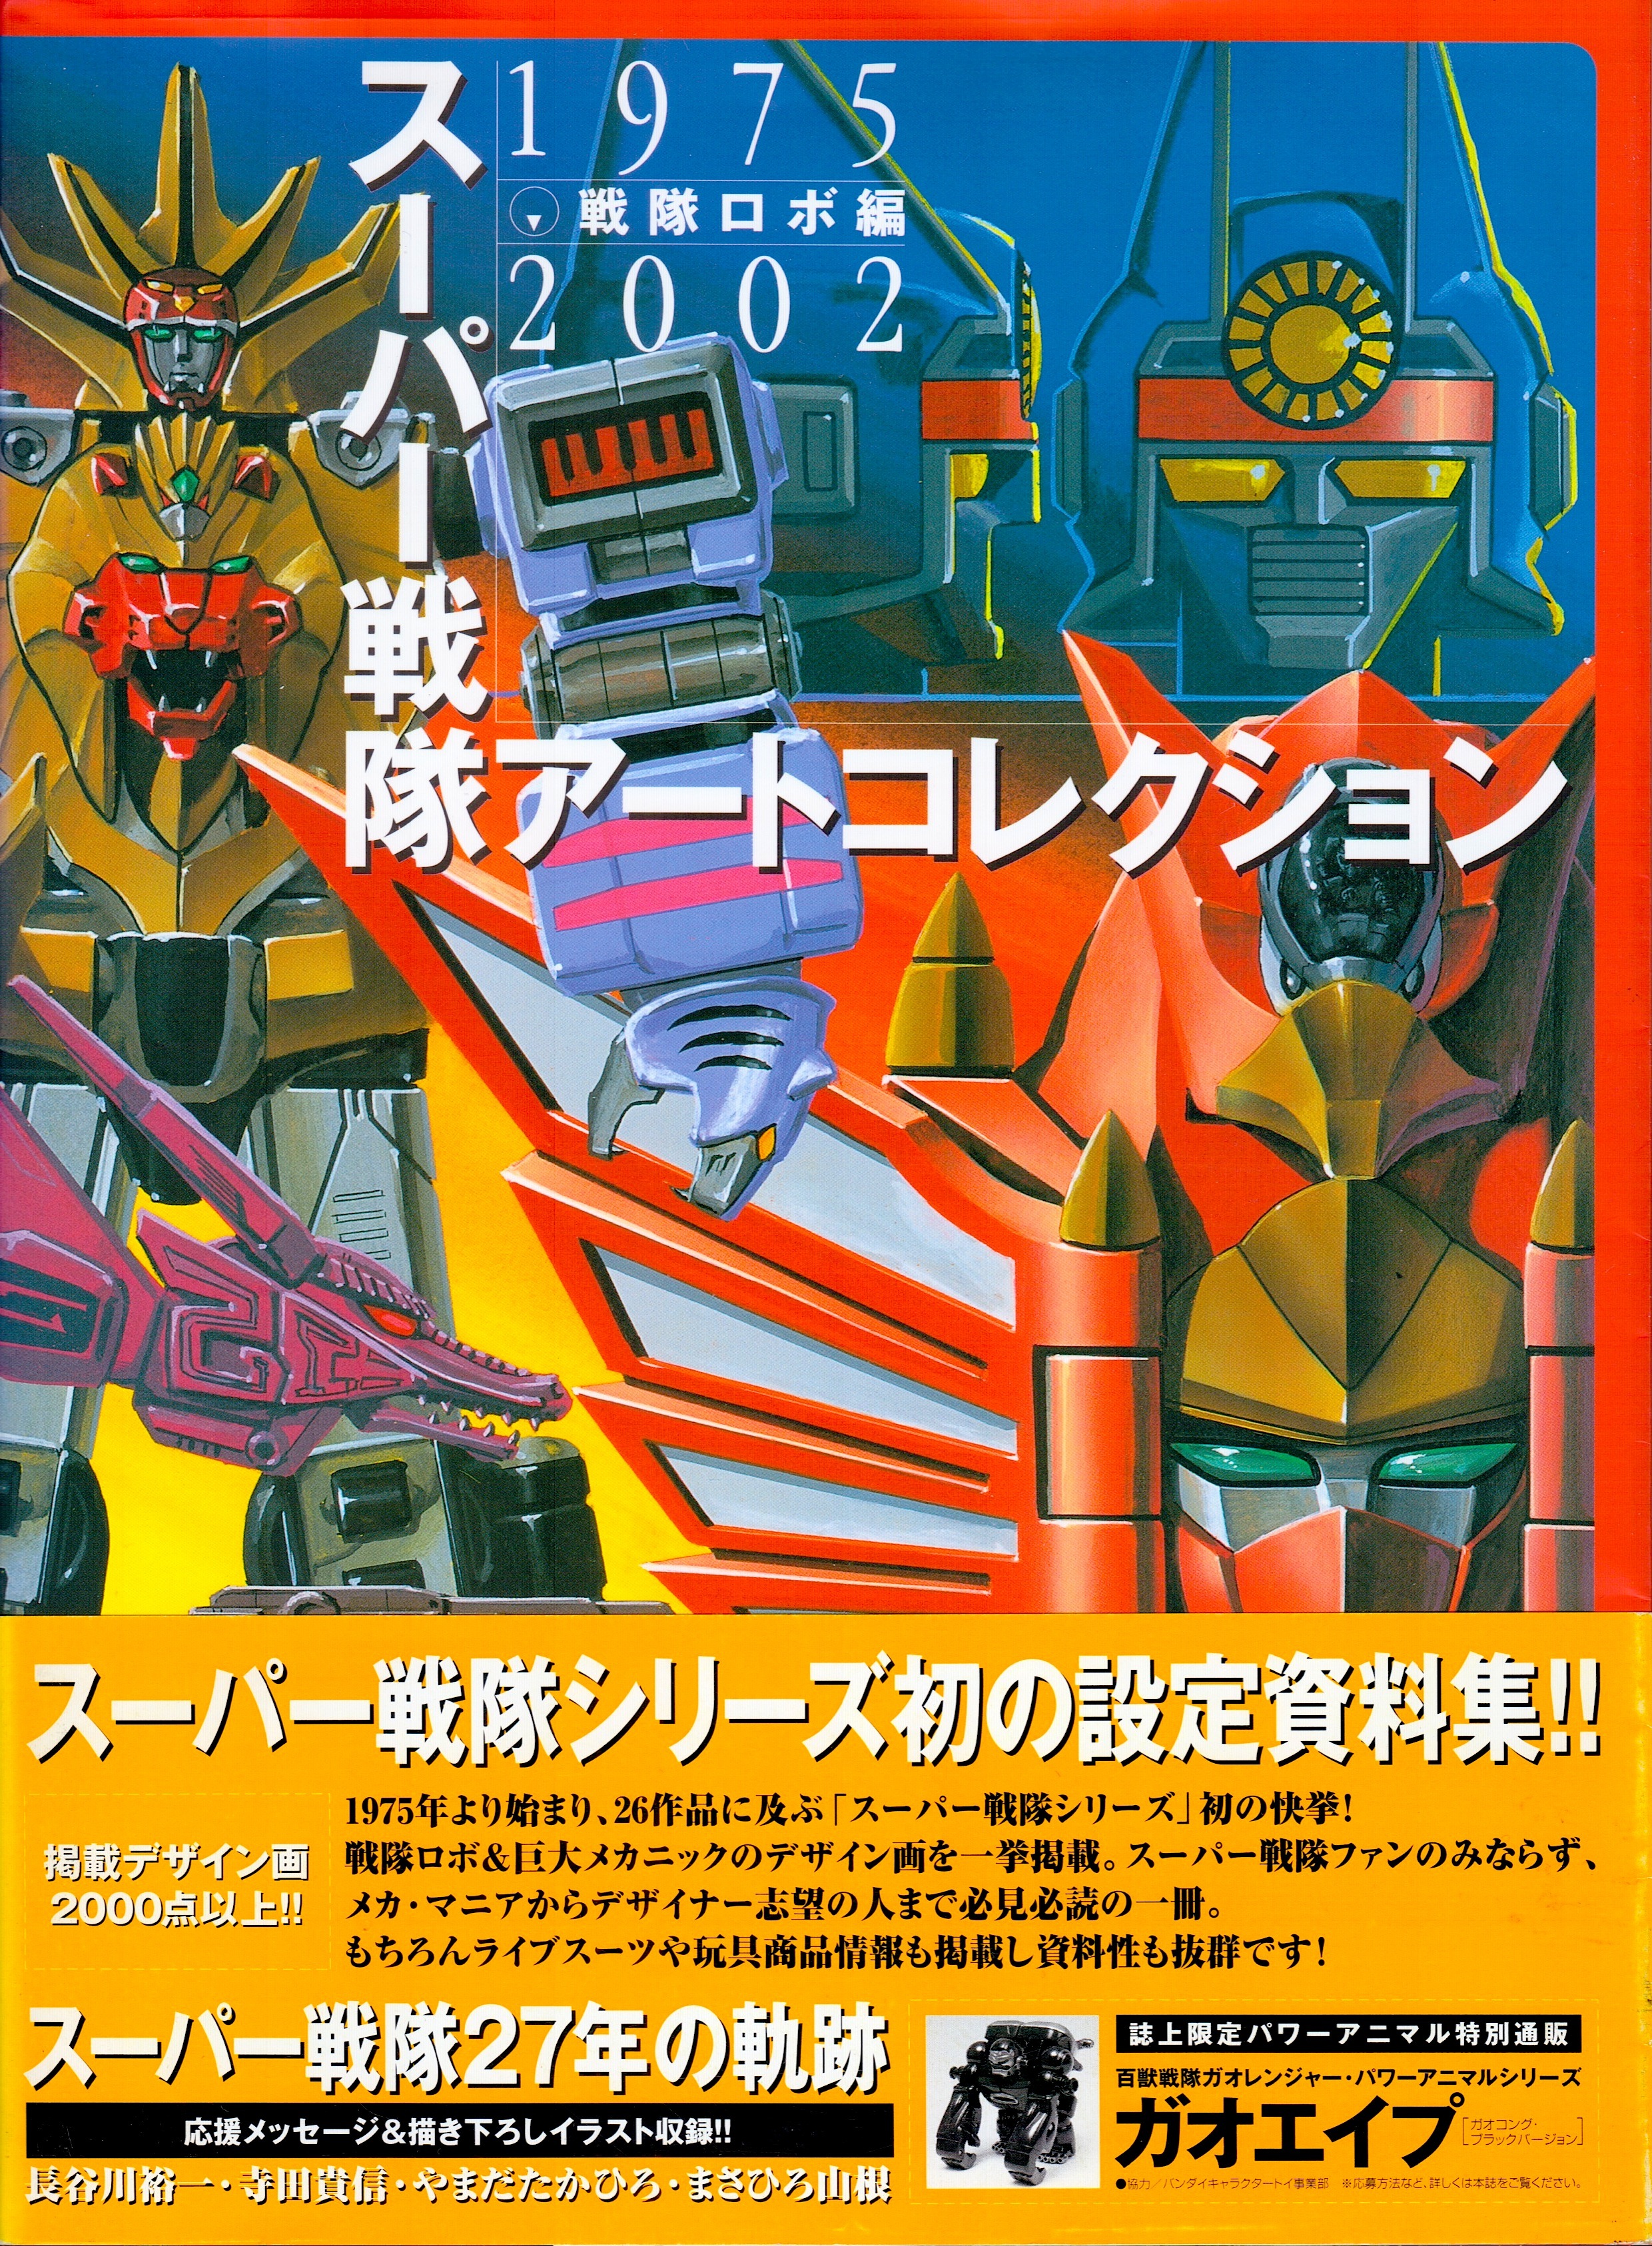 Super_Sentai_Robot_Art_Collection_000_1.jpg